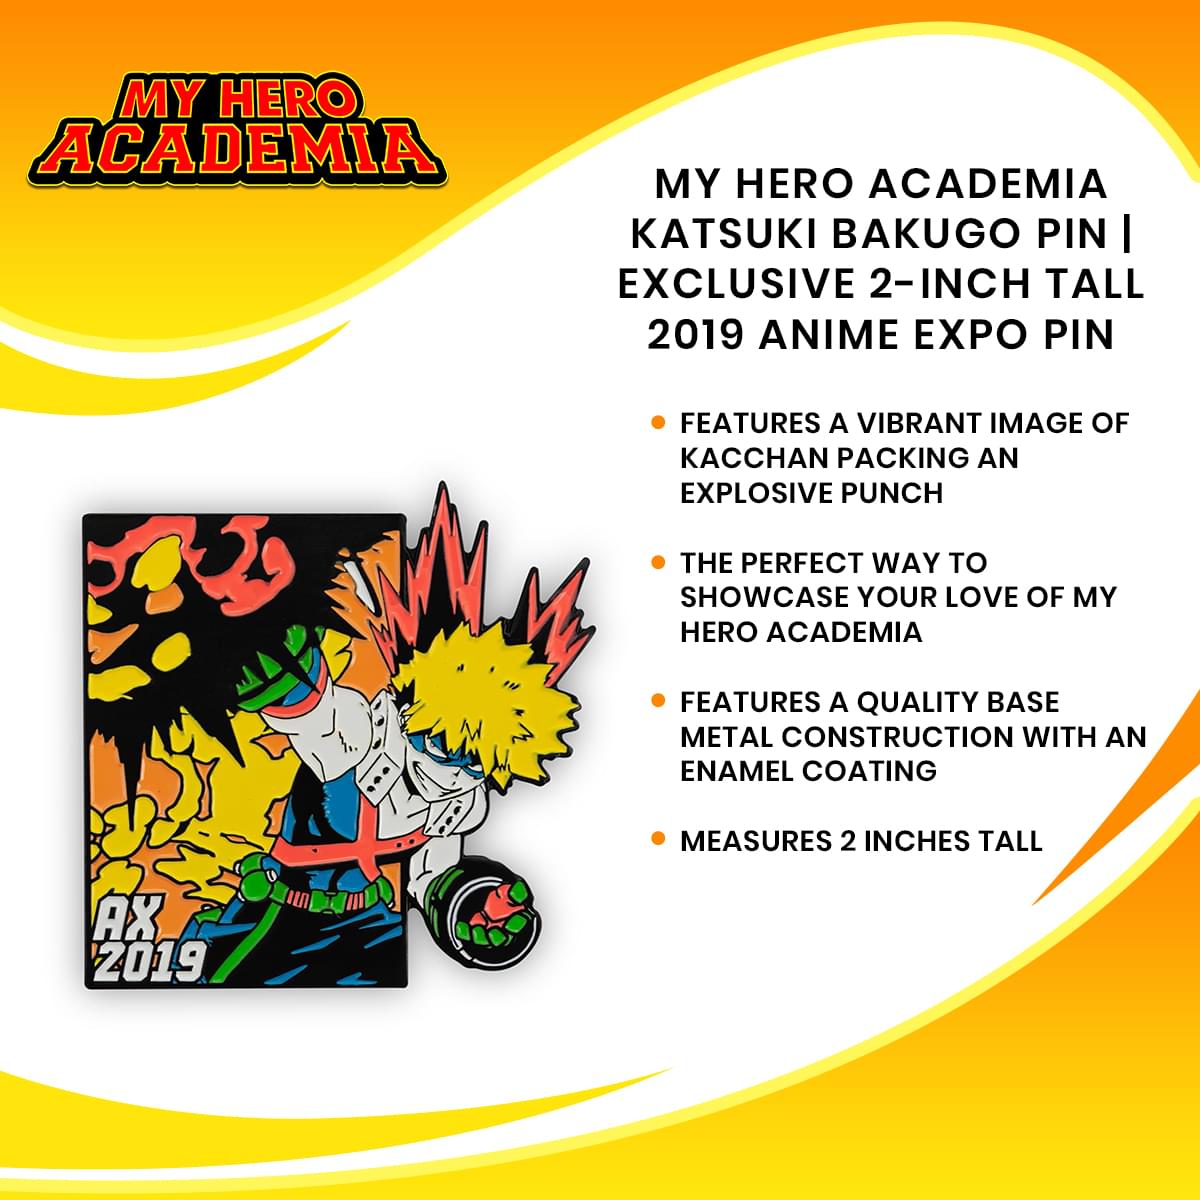 My Hero Academia Katsuki Bakugo Pin | Exclusive 2-Inch Tall 2019 Anime Expo Pin